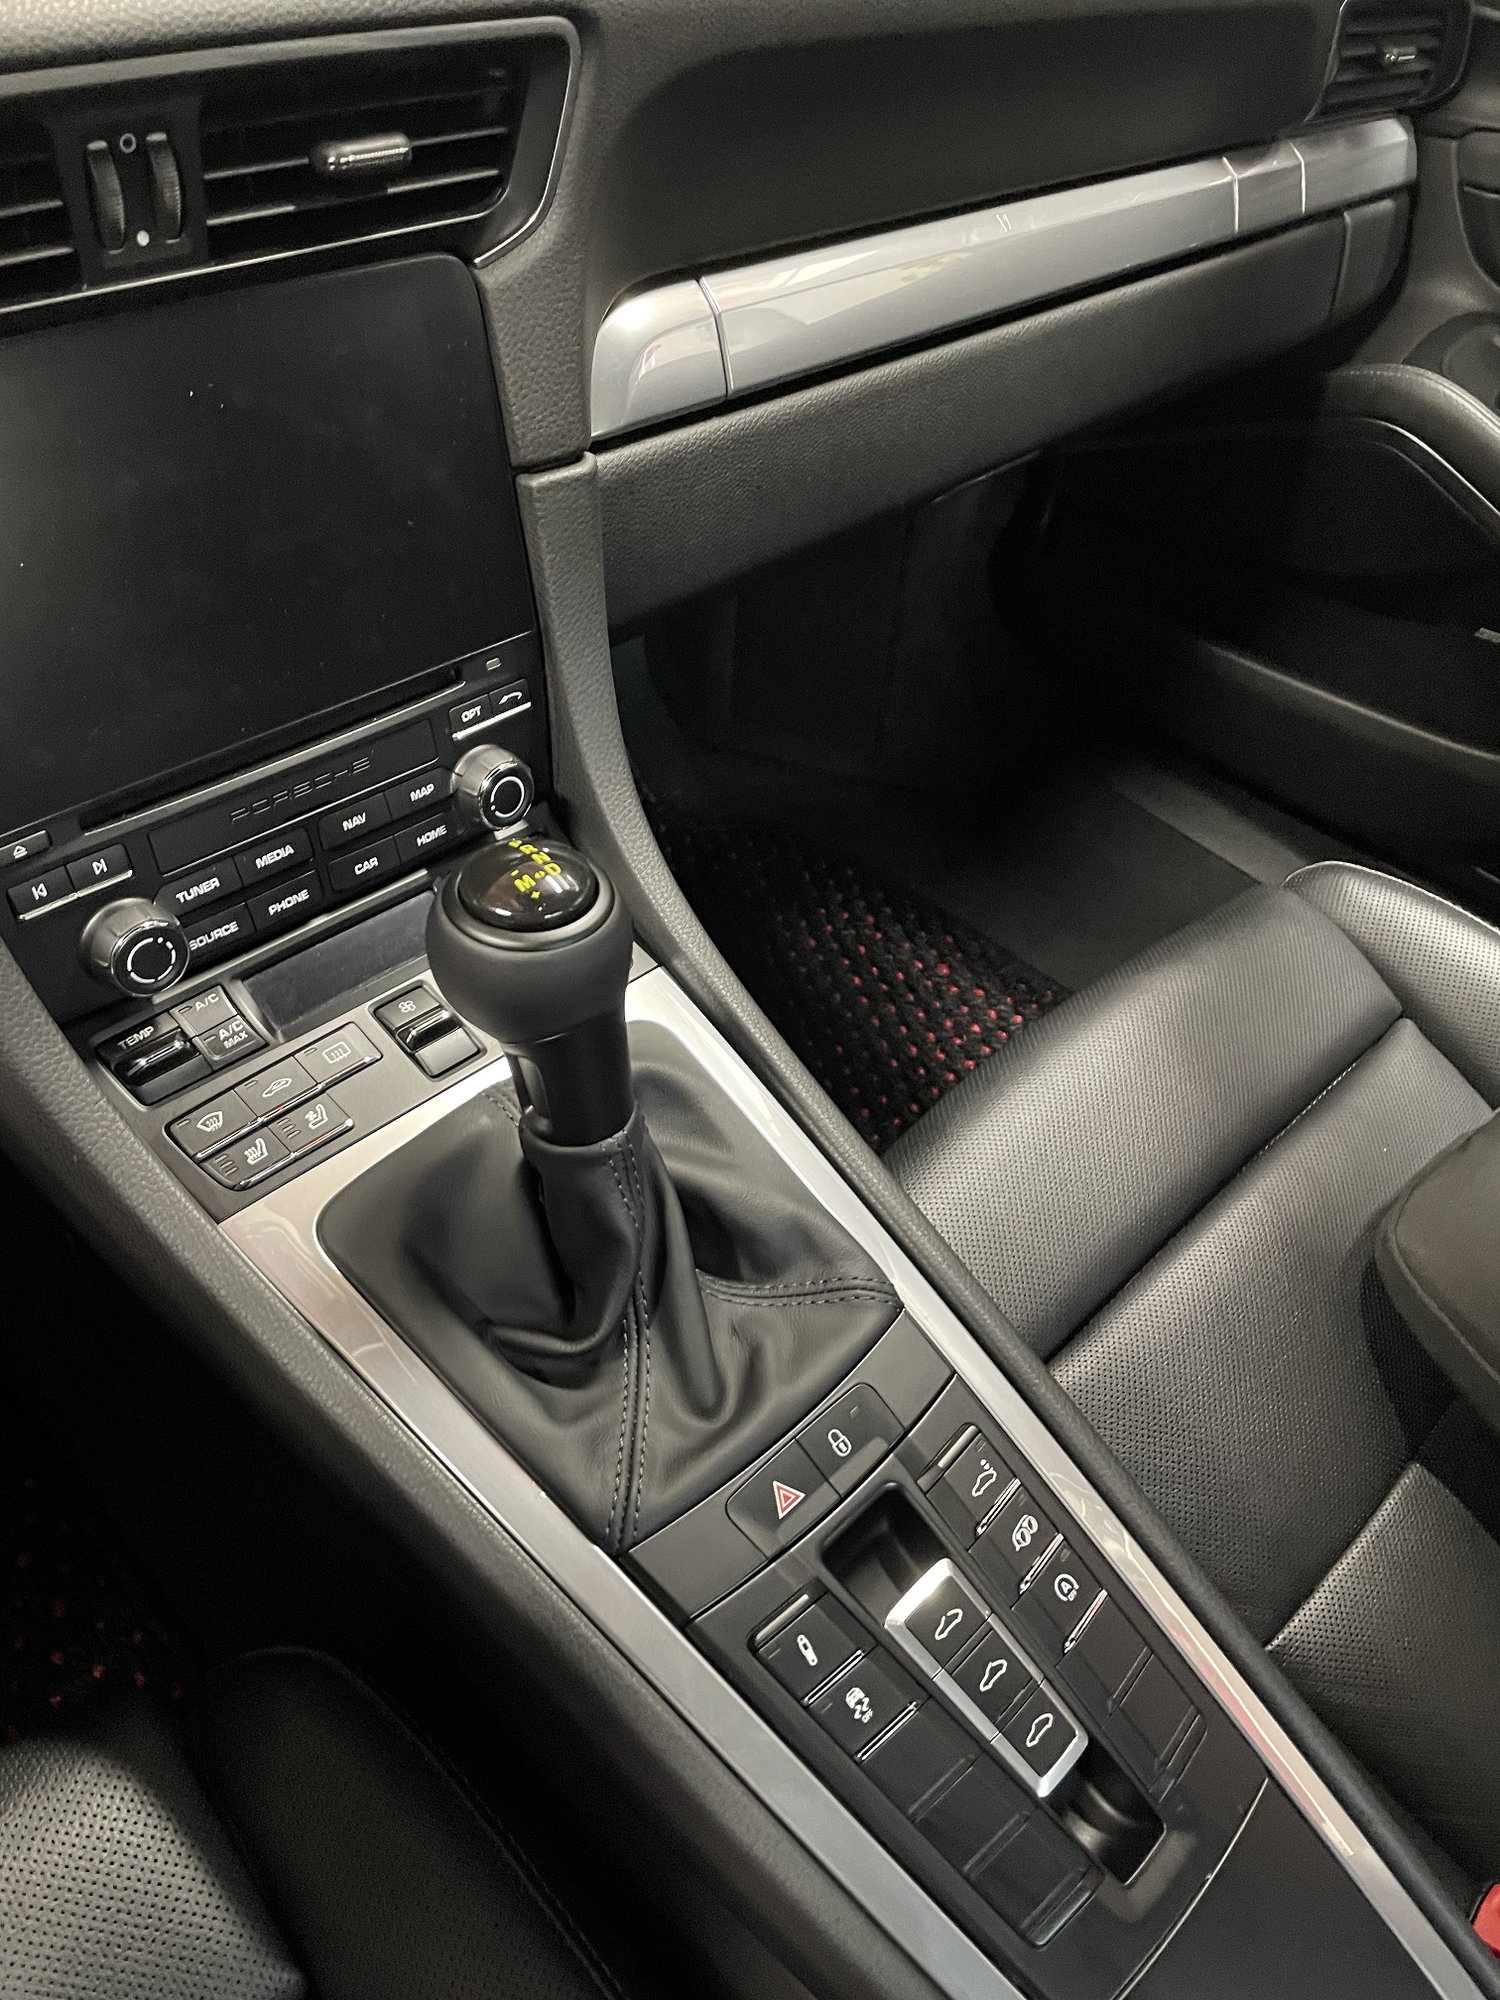 992 GT3 PDK Shift knob - Rennlist - Porsche Discussion Forums